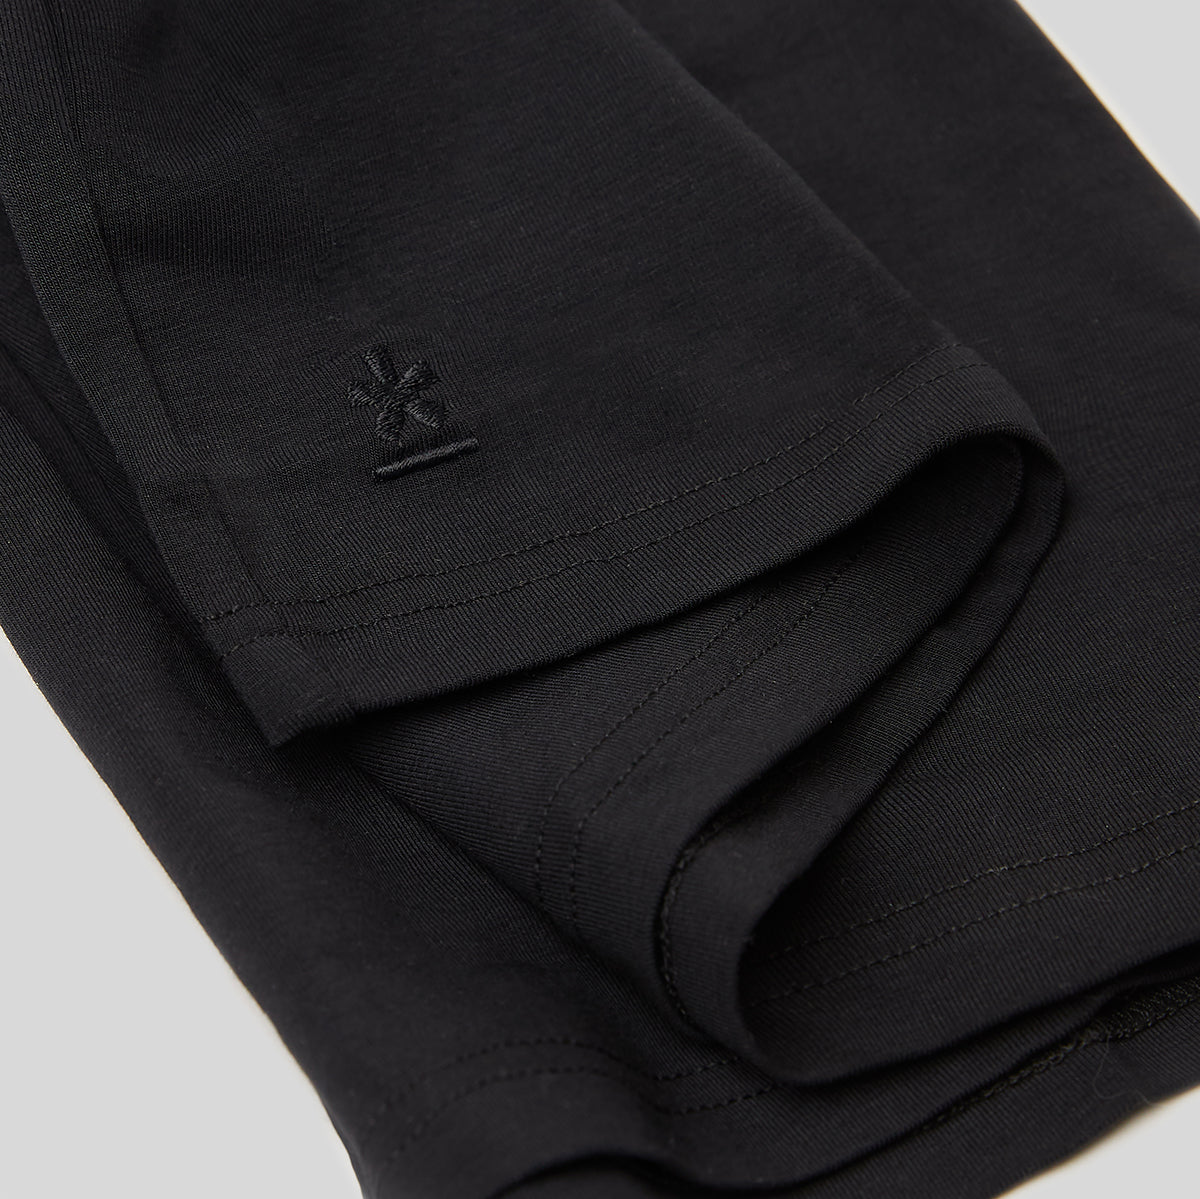 Black Shirt Fabric close view